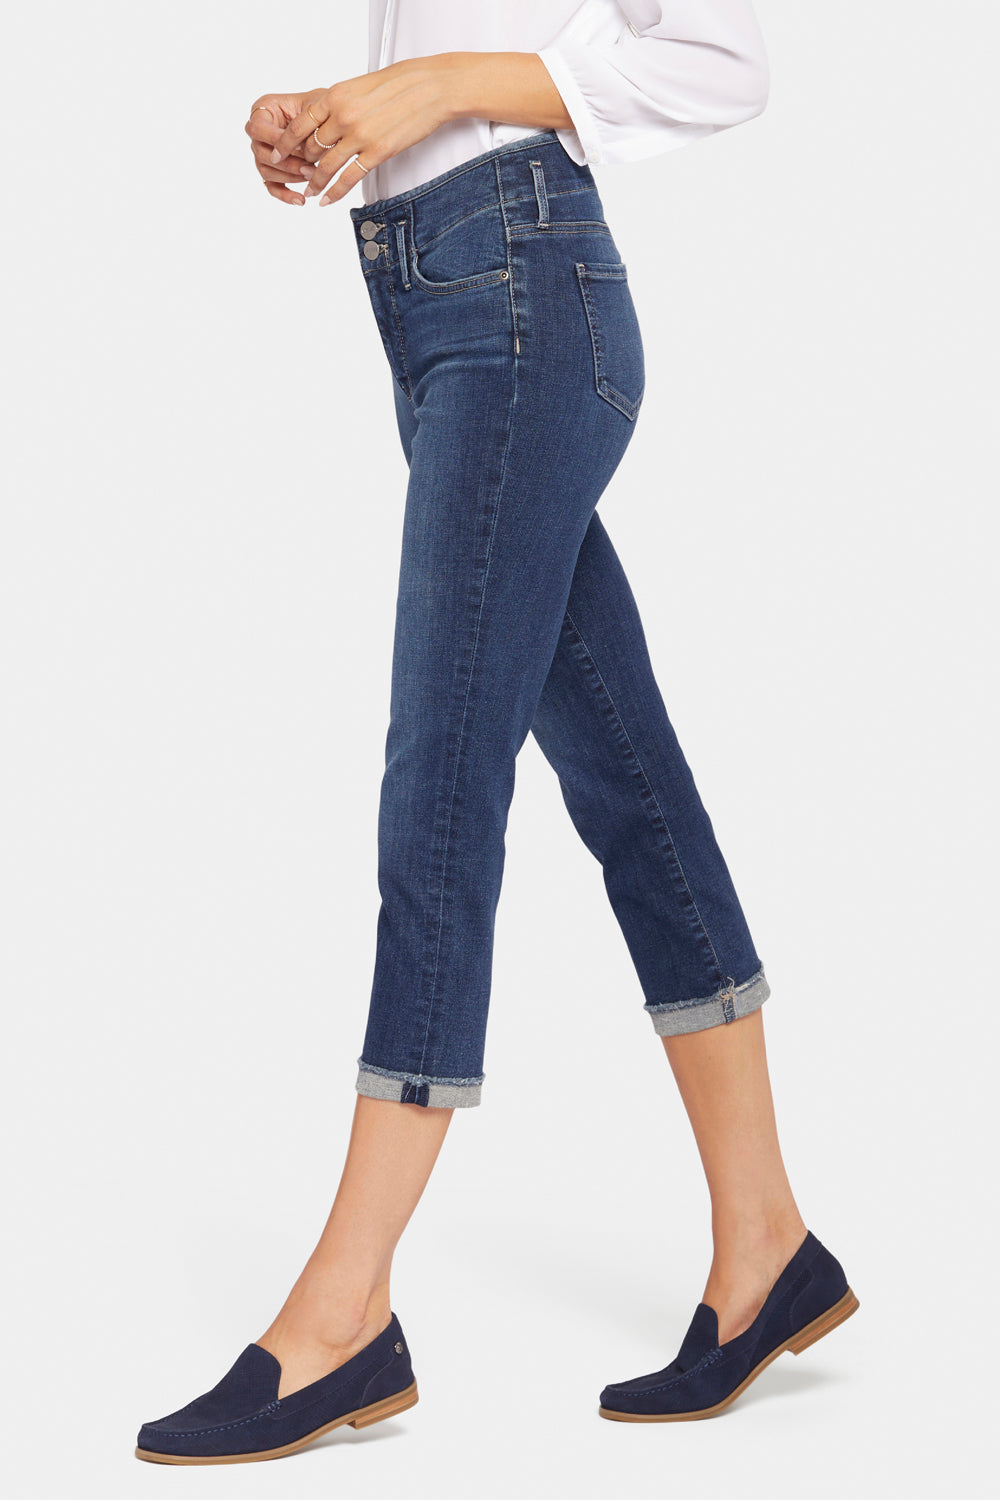 NYDJ Chloe Capri Jeans With Cuffs - Dimension